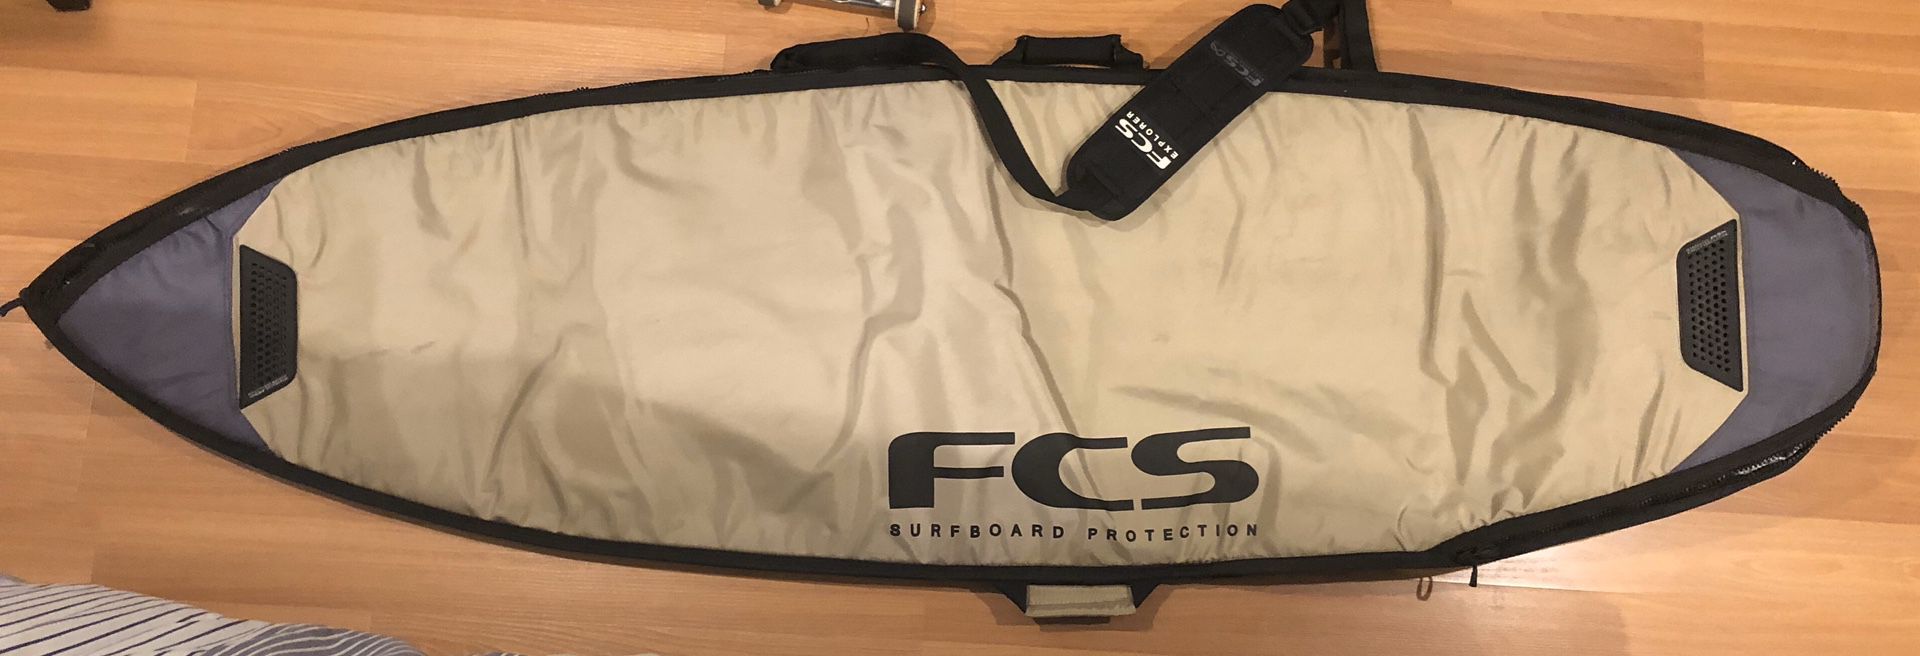 FCS brand Surfboard travel bag